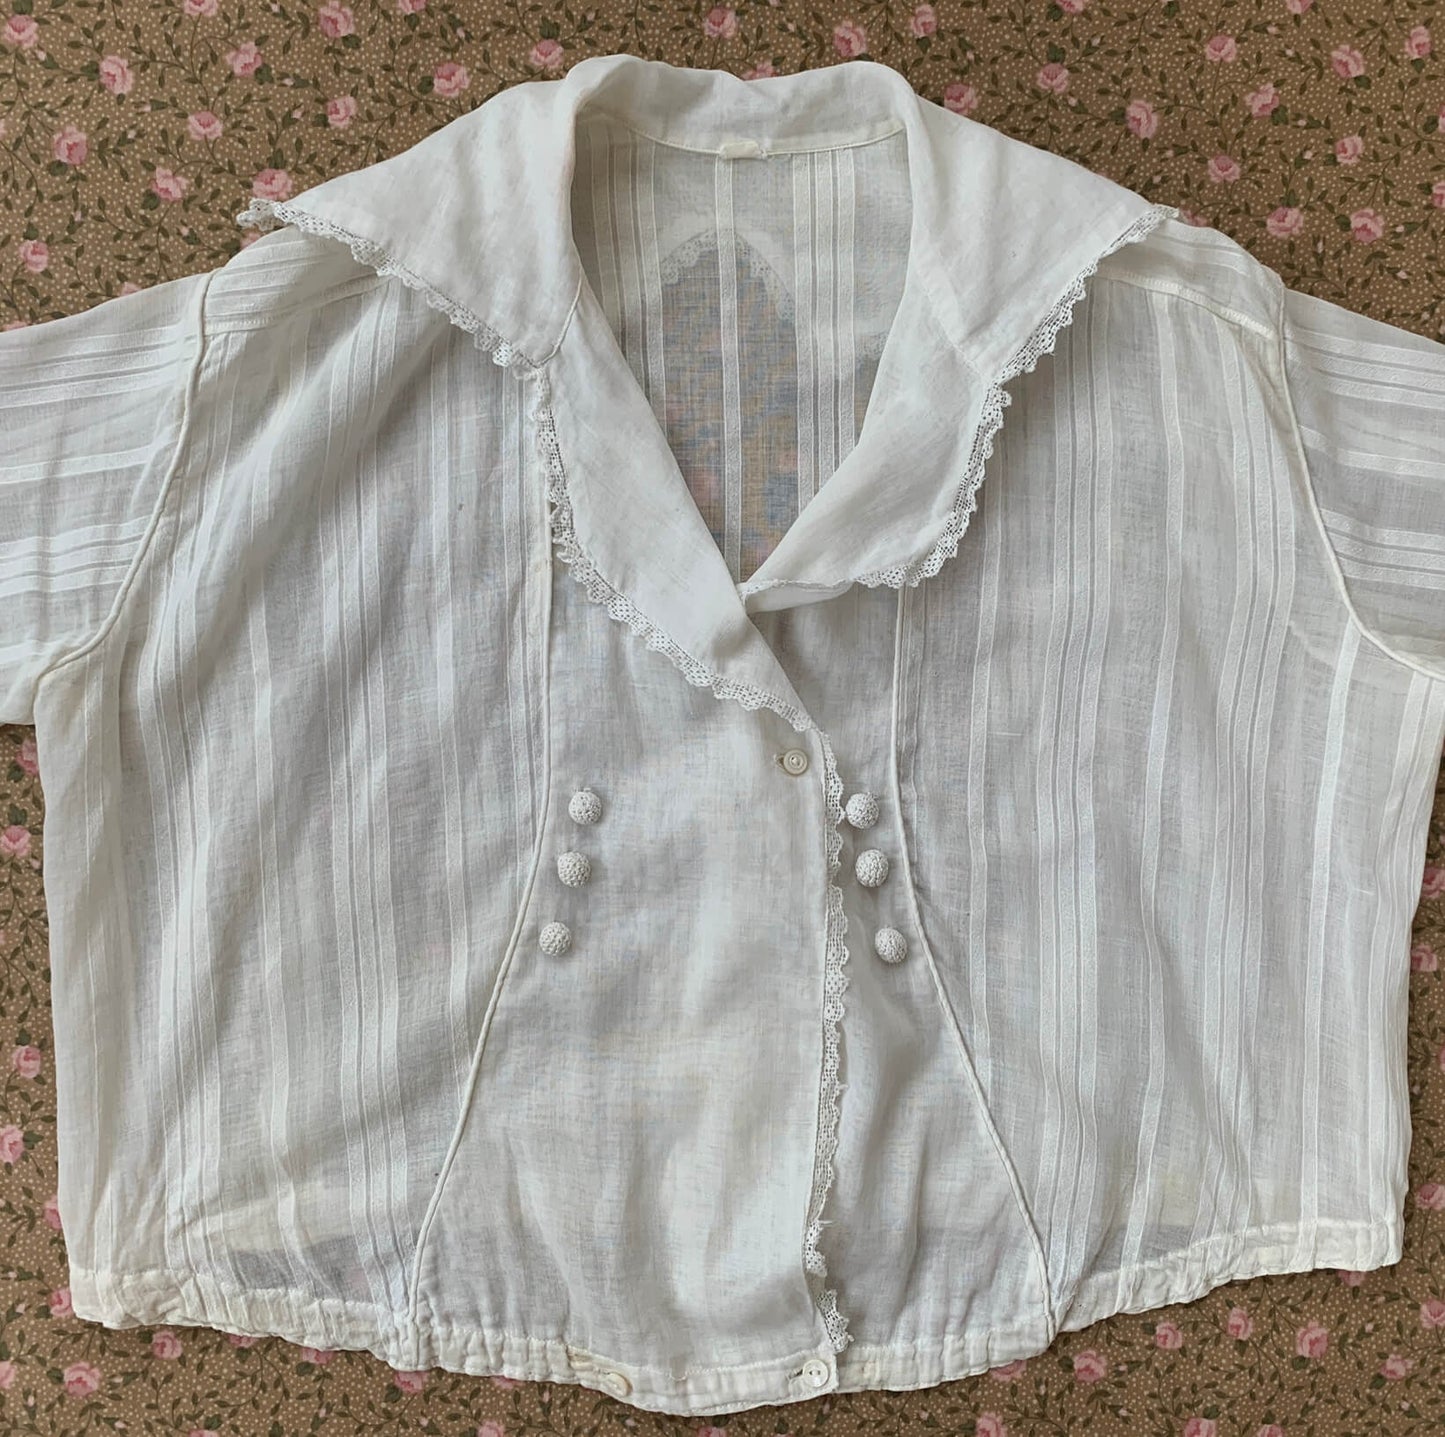 Flat view of white cotton antique shirt